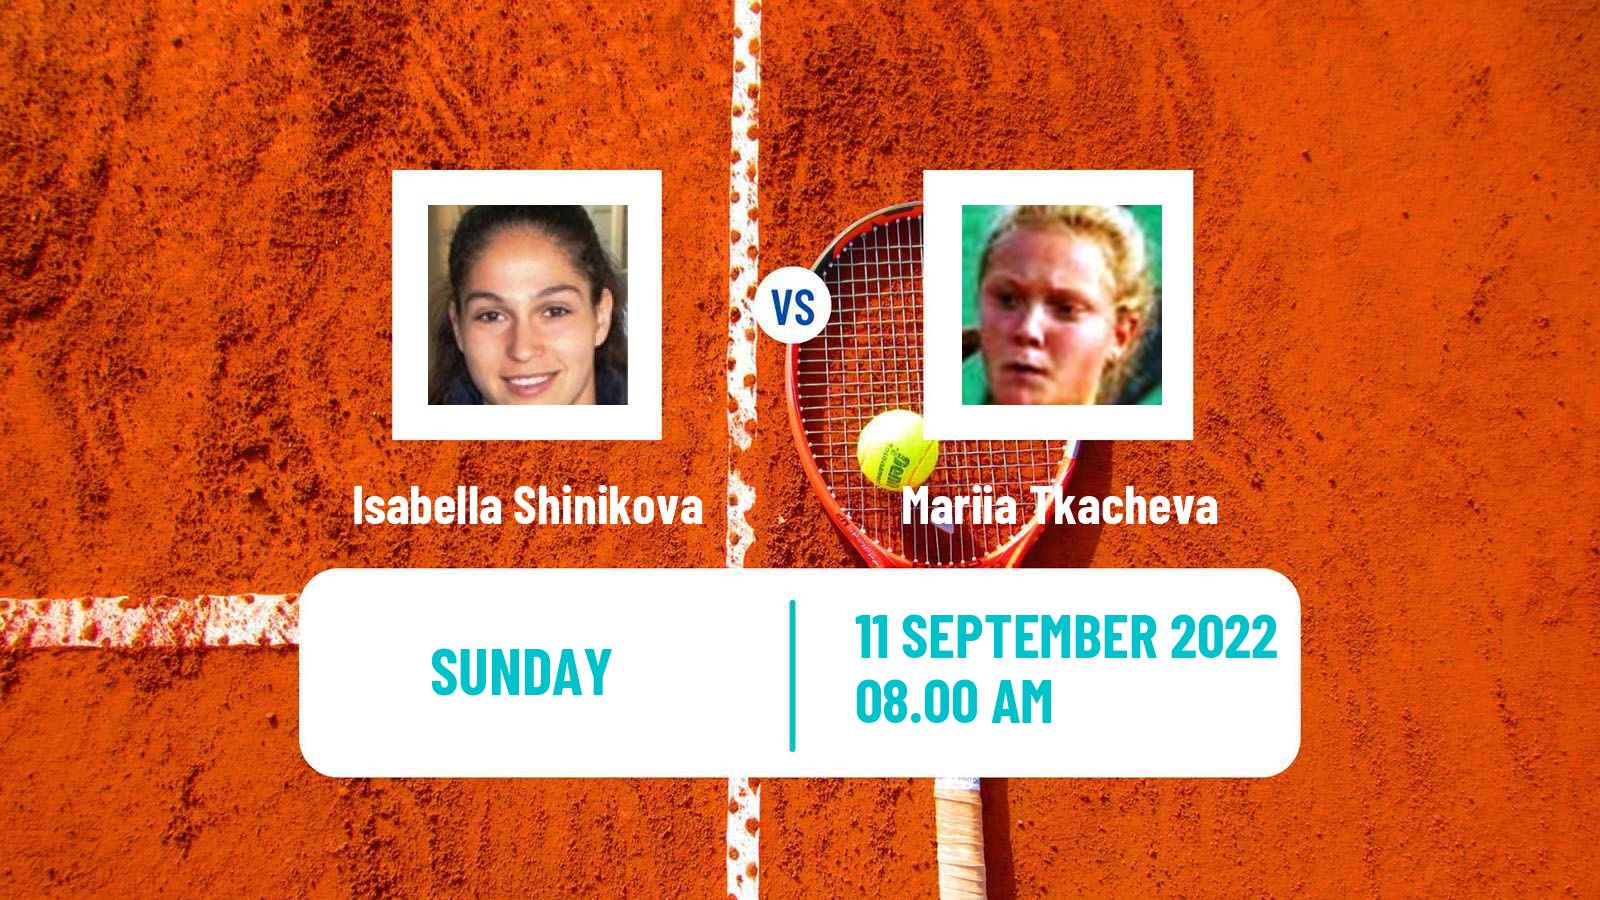 Tennis WTA Chennai Isabella Shinikova - Mariia Tkacheva